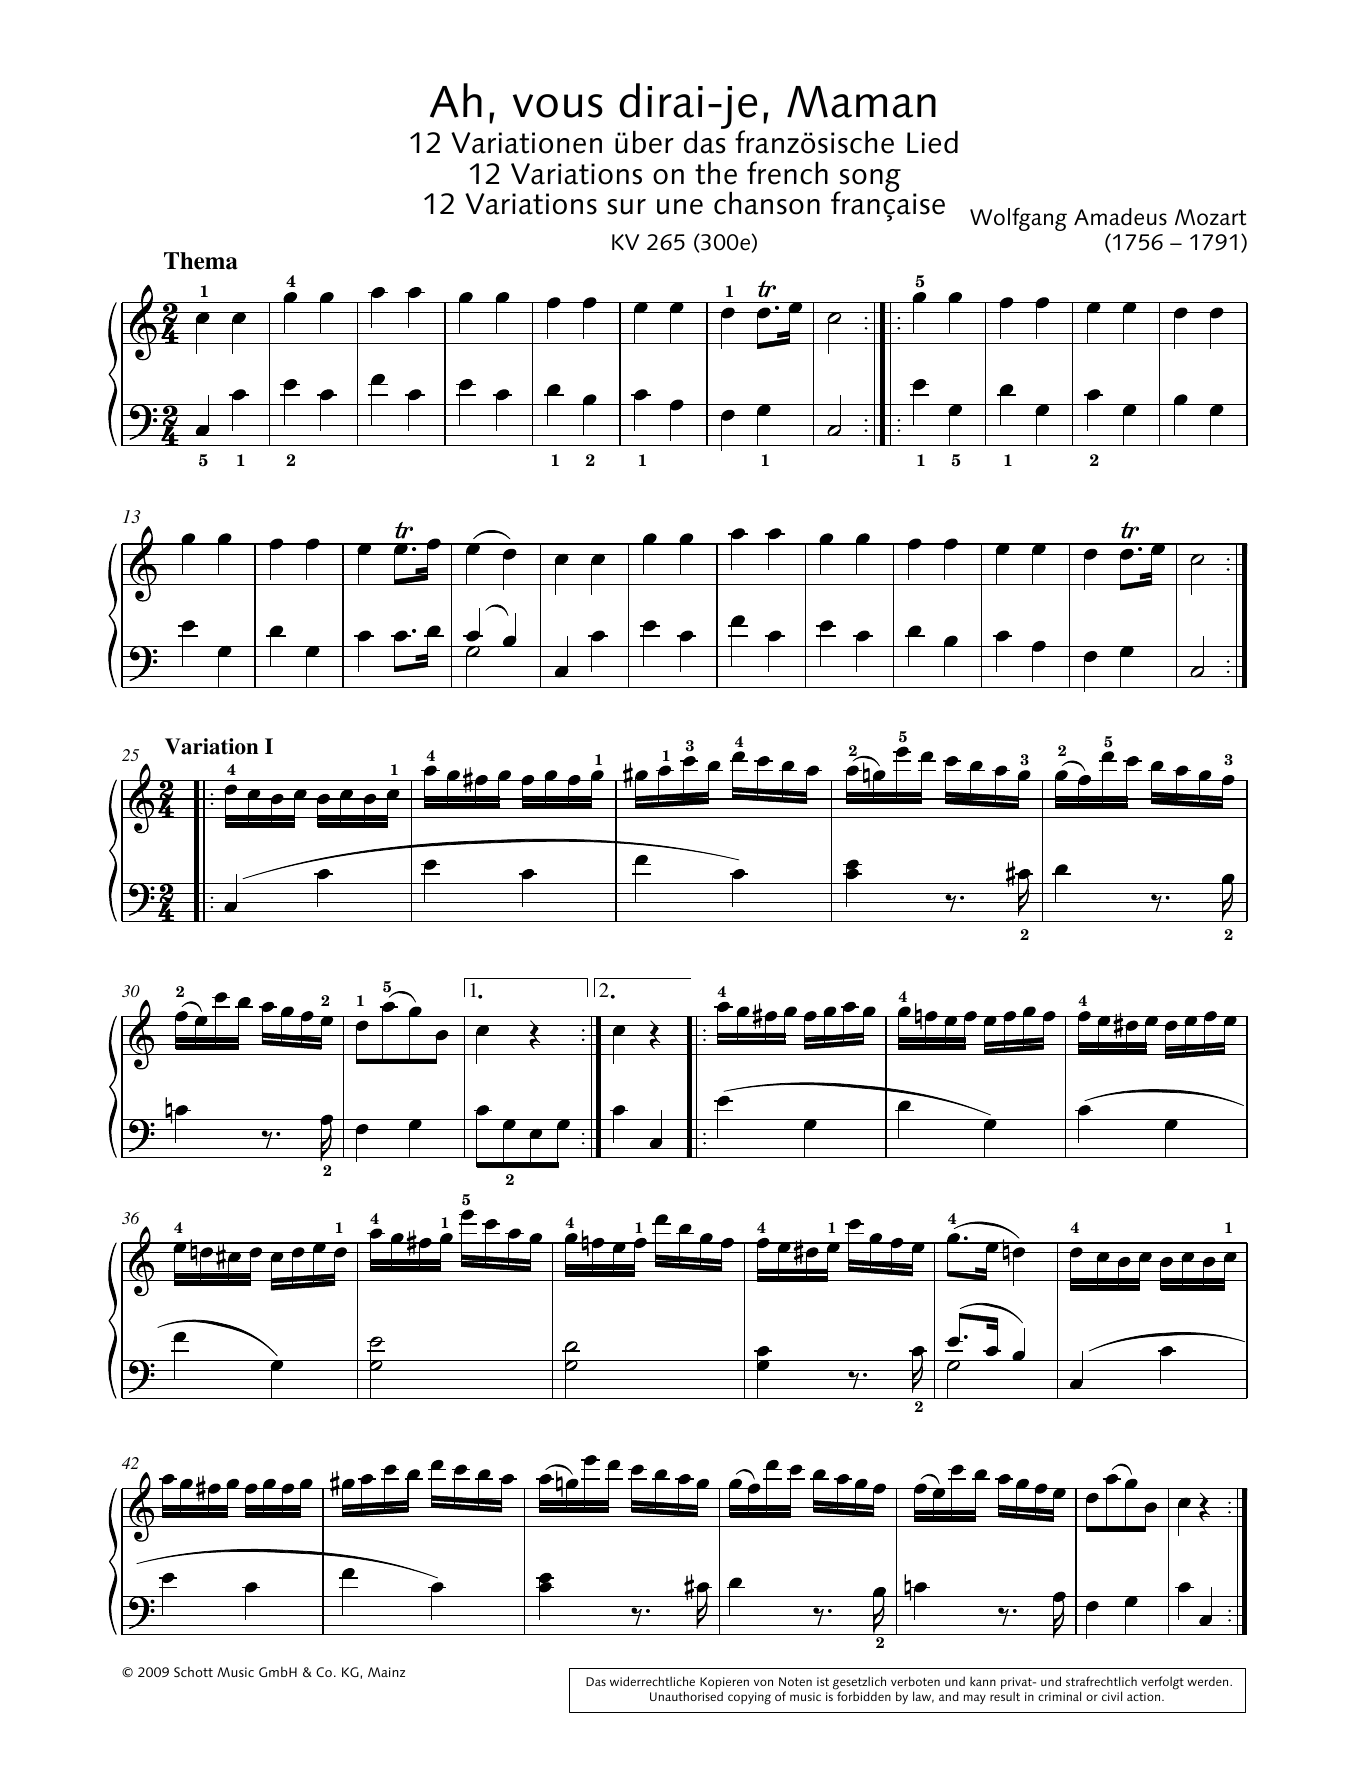 Download Wolfgang Amadeus Mozart Ah, vous dirai-je, Maman in C major Sheet Music